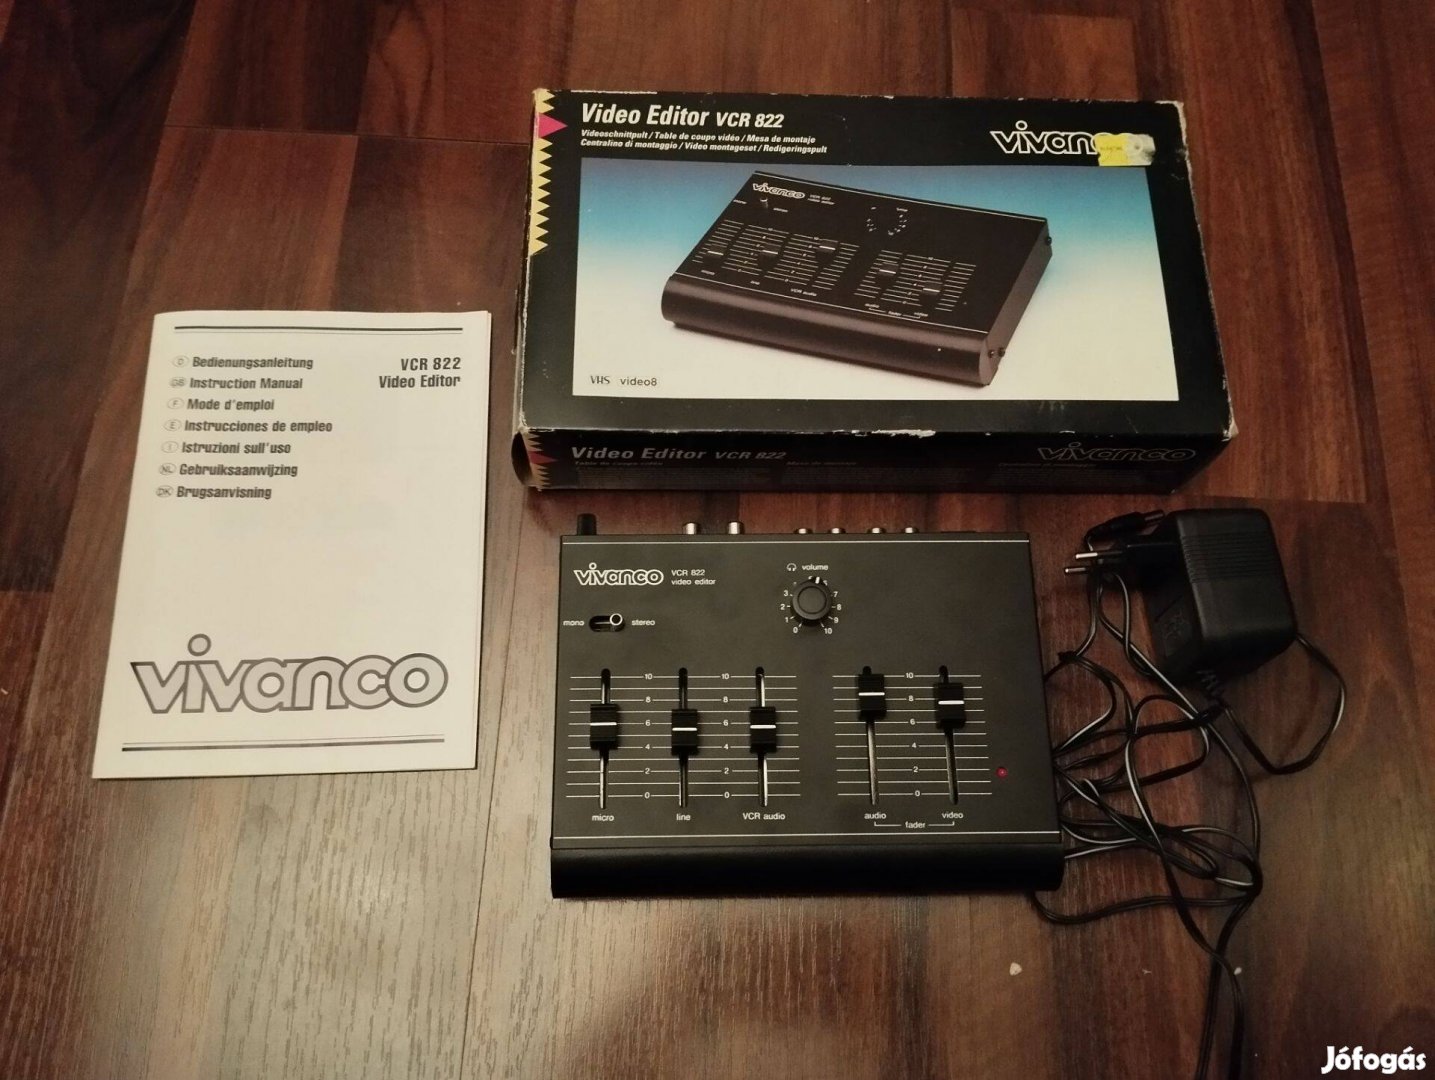 Vivanco Video Editor VCR 822